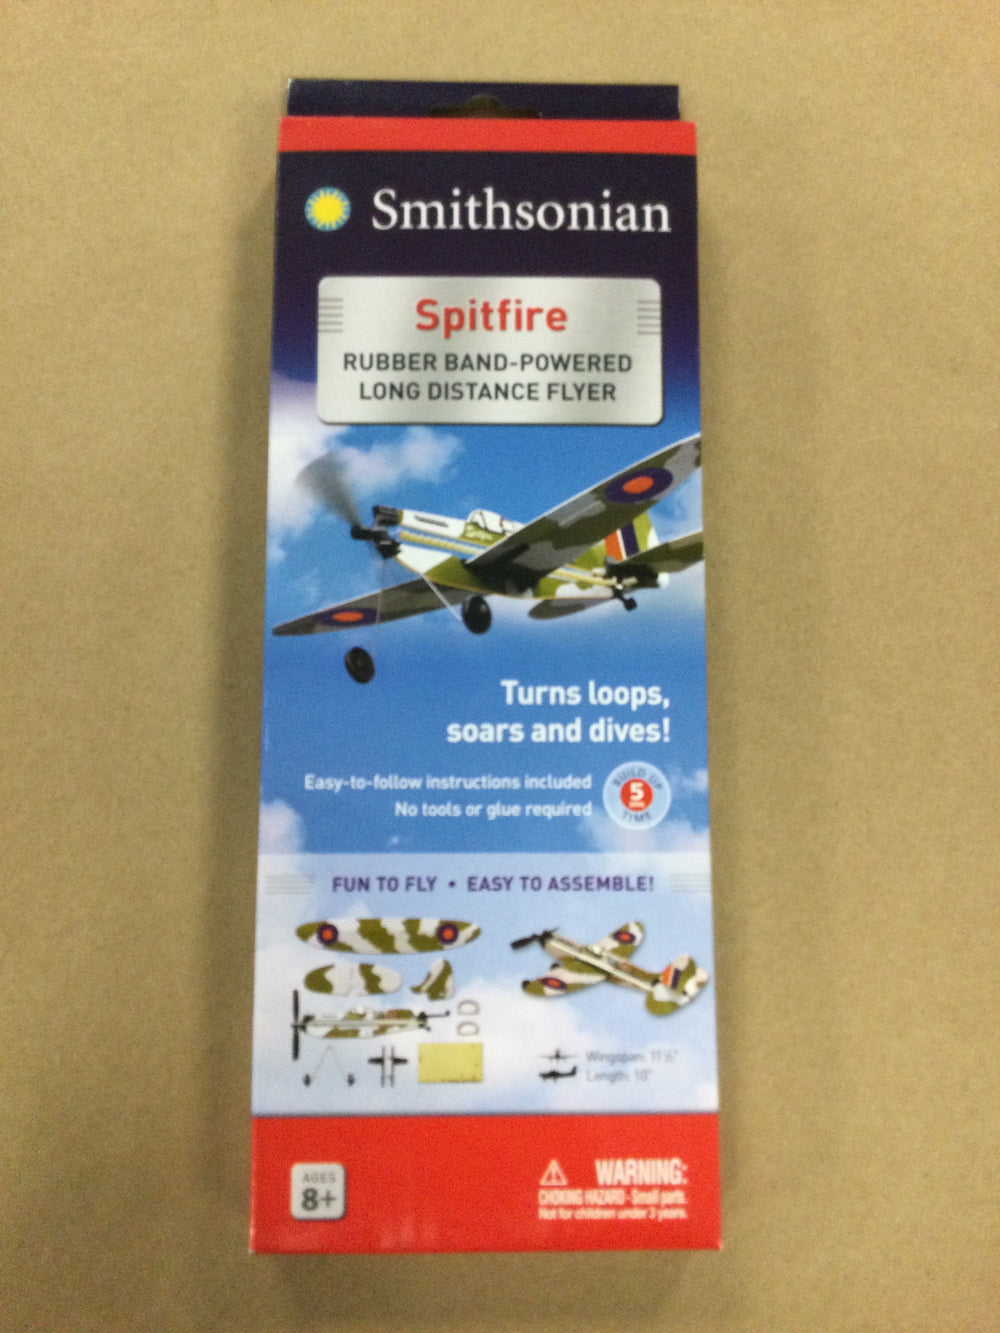 Smithsonian Spitfire Flyer